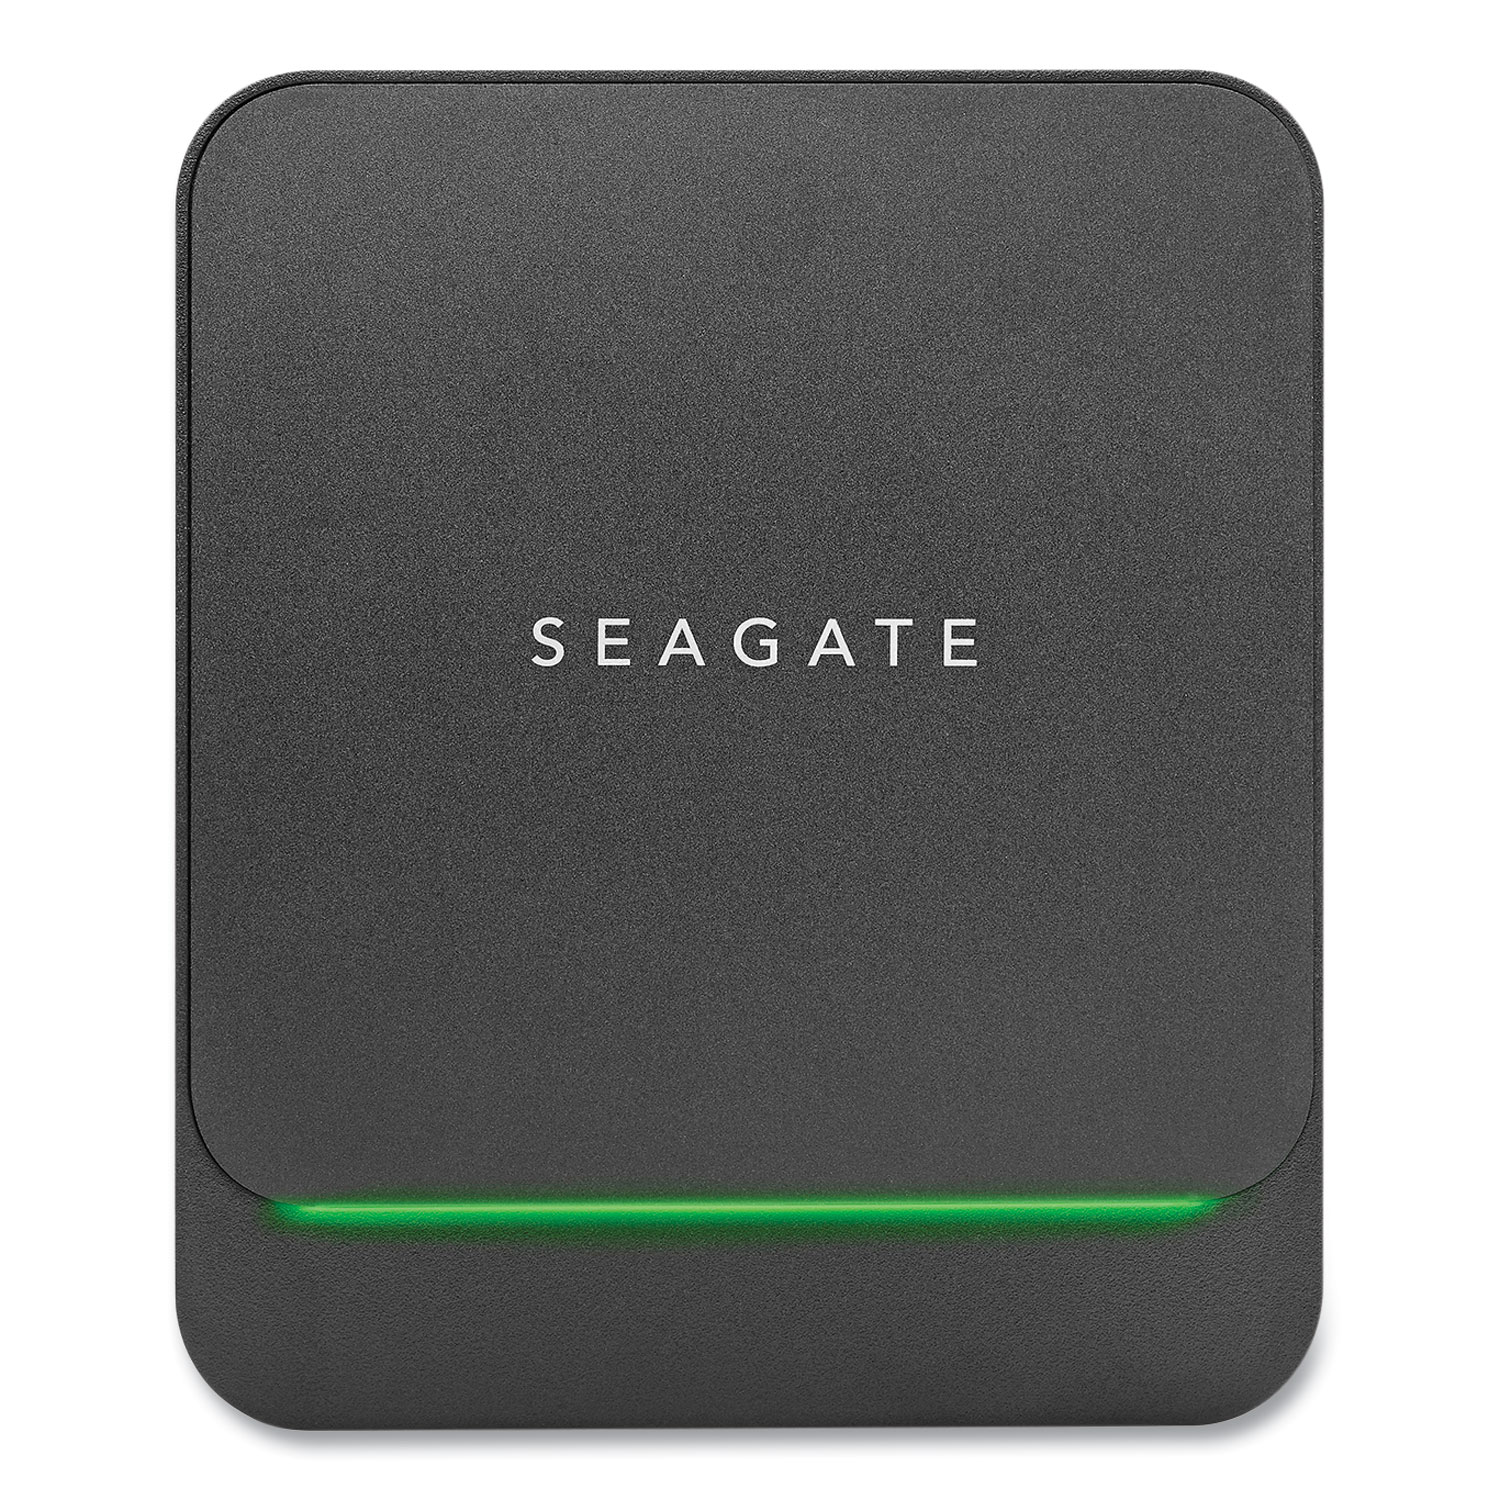  Seagate STJM1000400 BarraCuda Fast External Solid State Drive, 1 TB, USB 3.0, Gray (SGT24424443) 